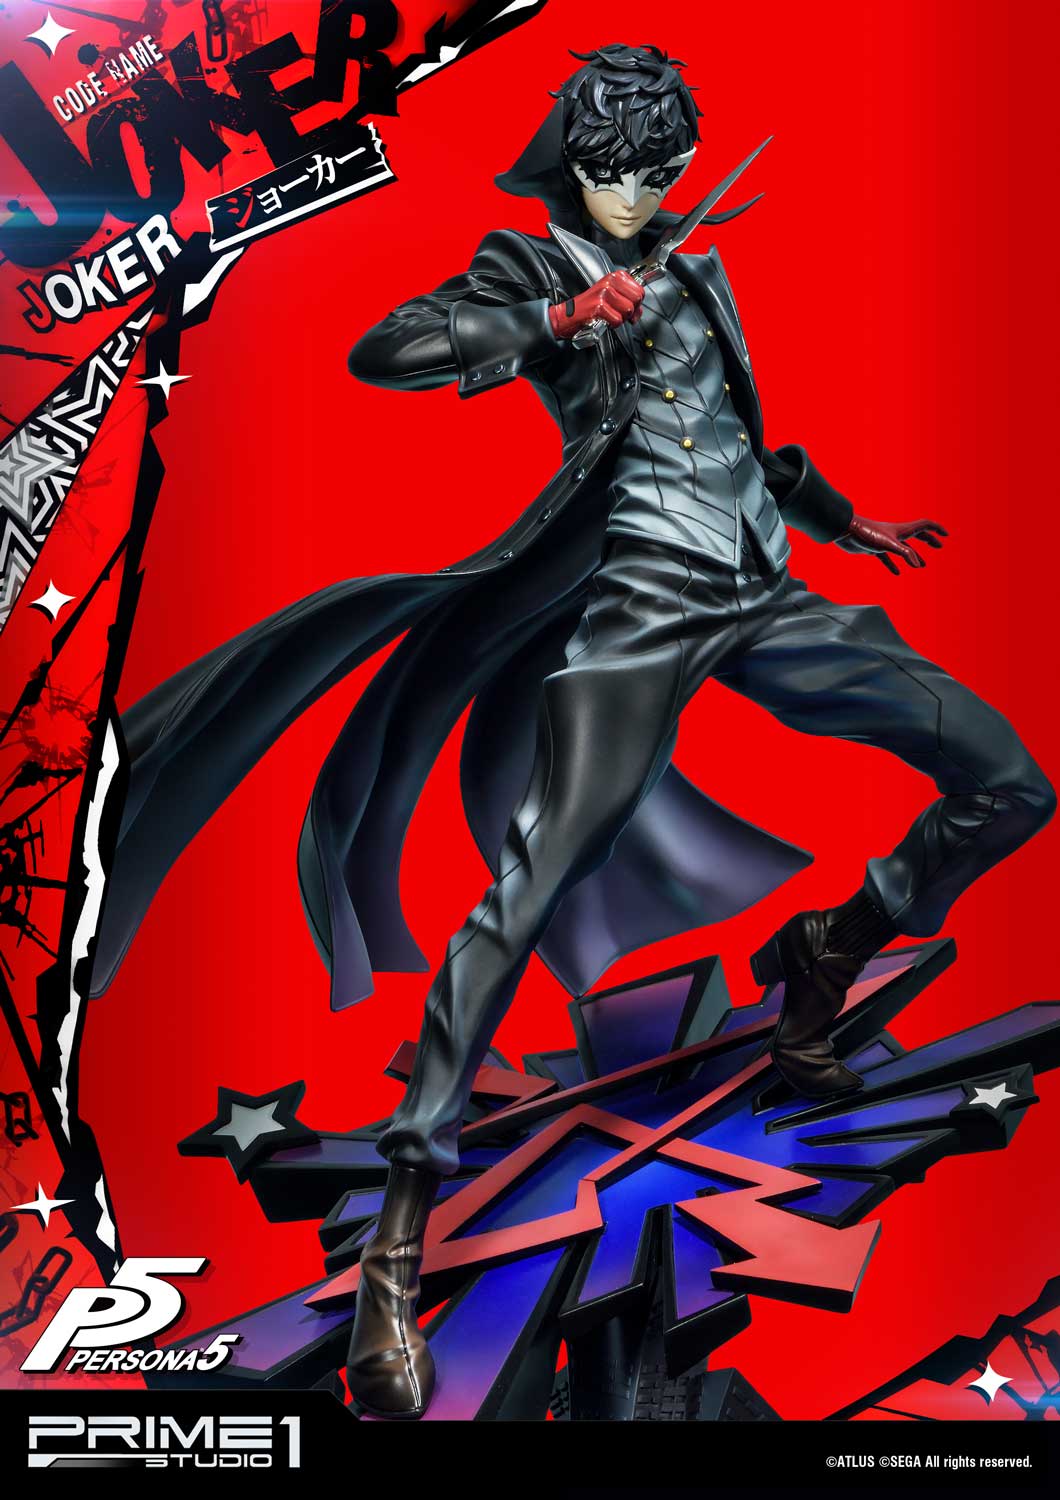 Prime 1 Studio Persona 5 Protagonist Joker Statue